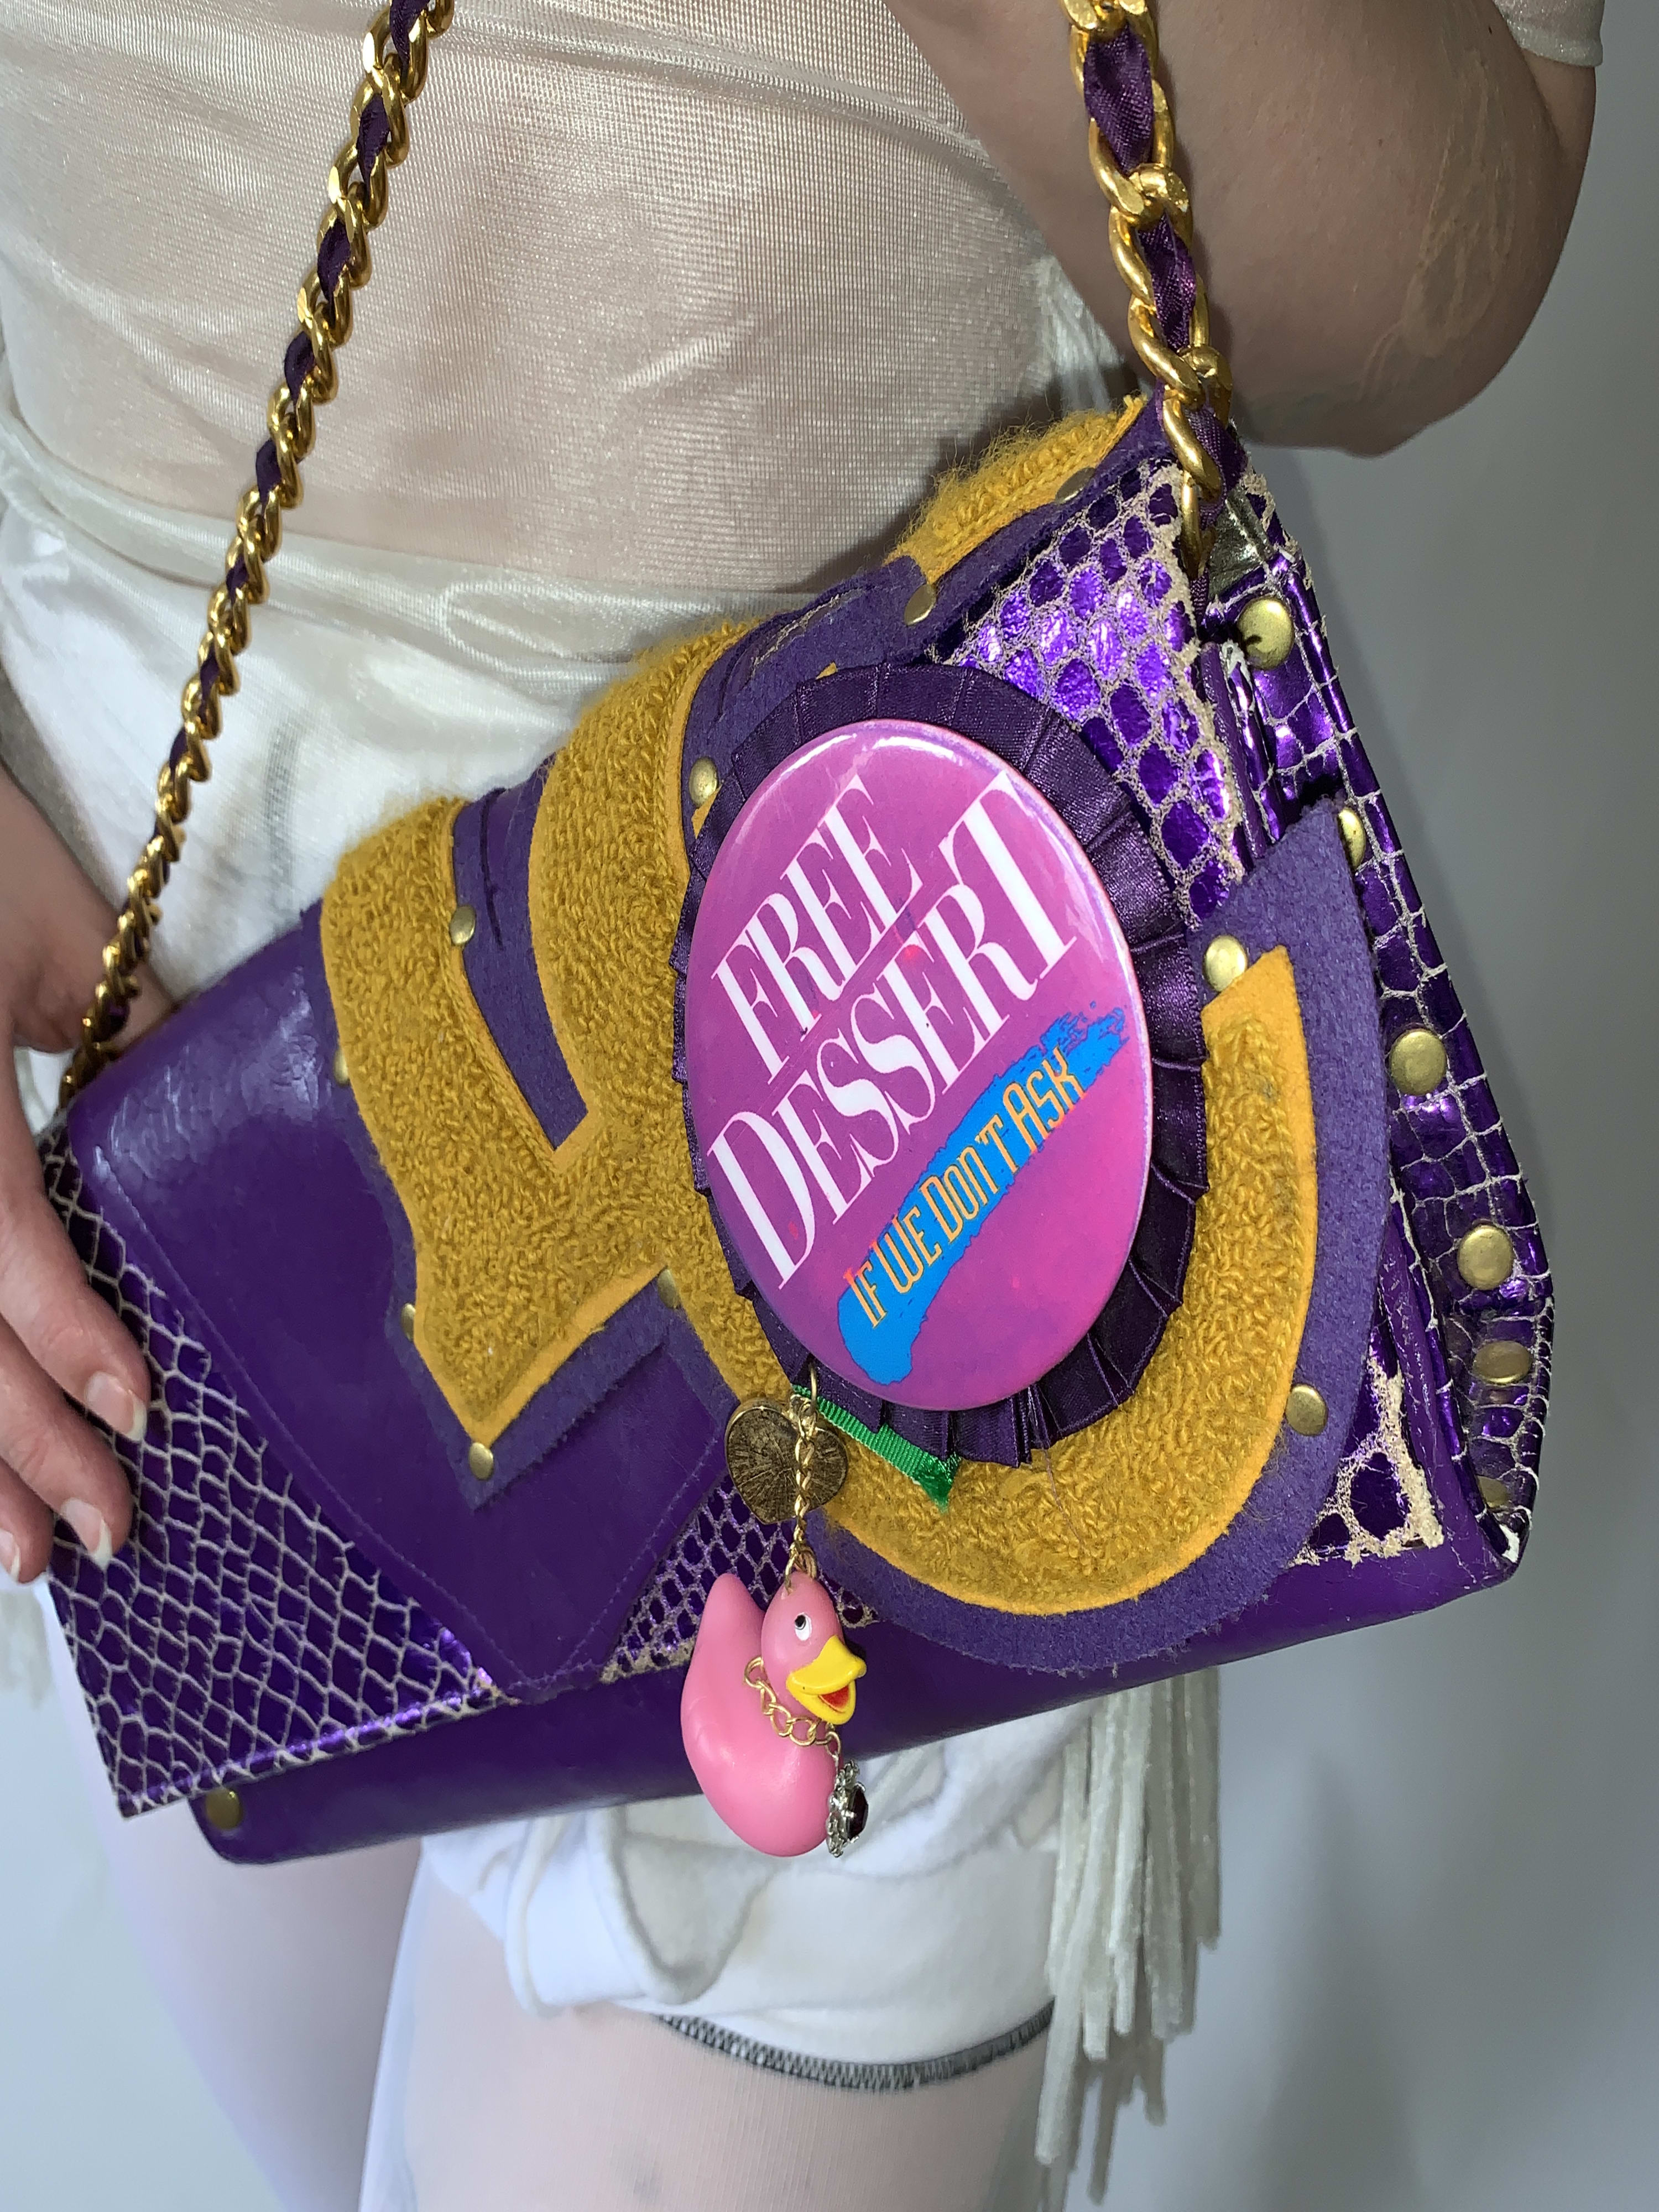 Women's Purple Designer Handbags & Wallets | Nordstrom